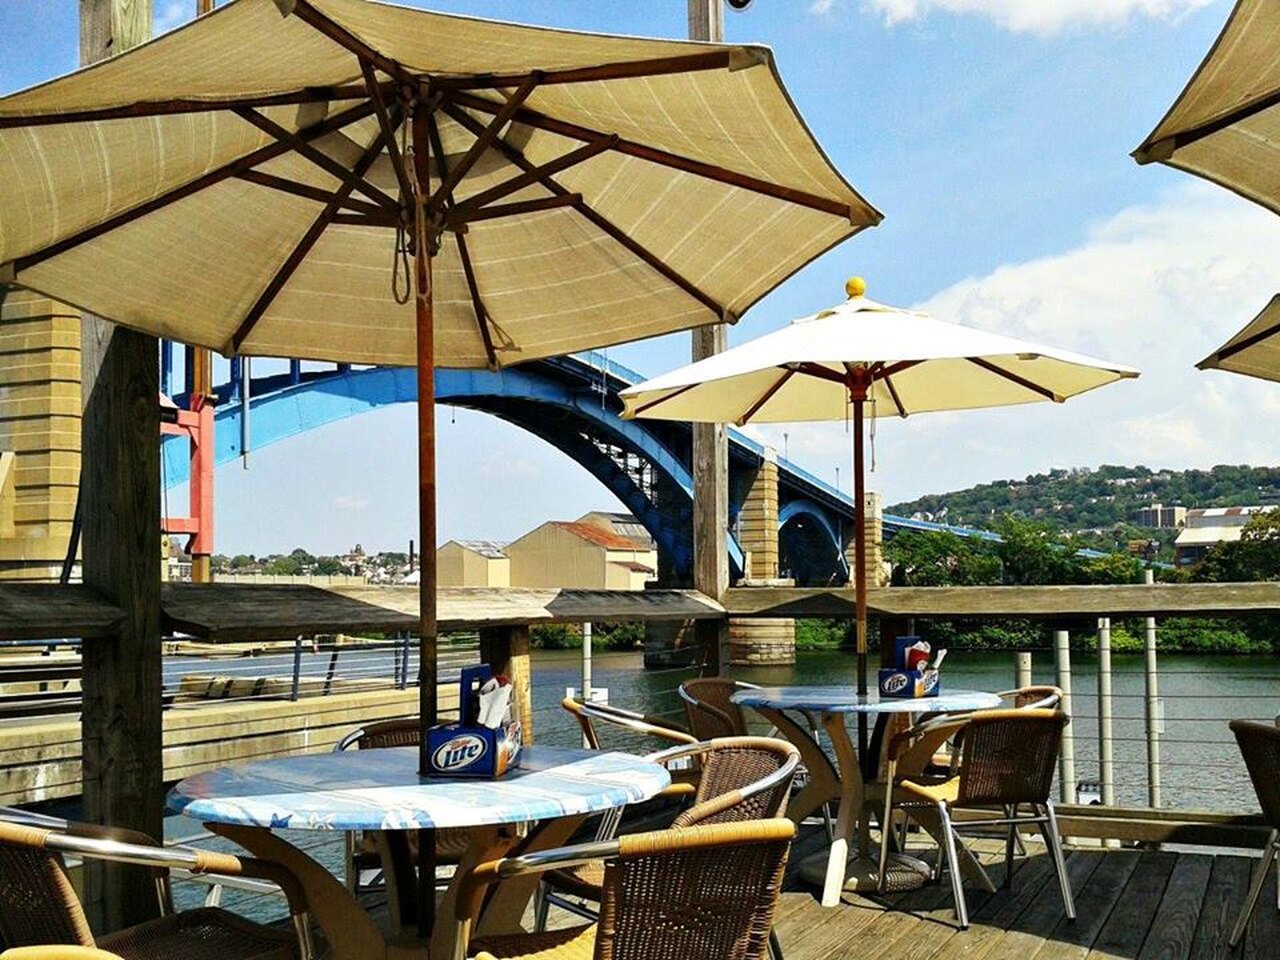 10 Best Waterfront Restaurants In Pittsburgh